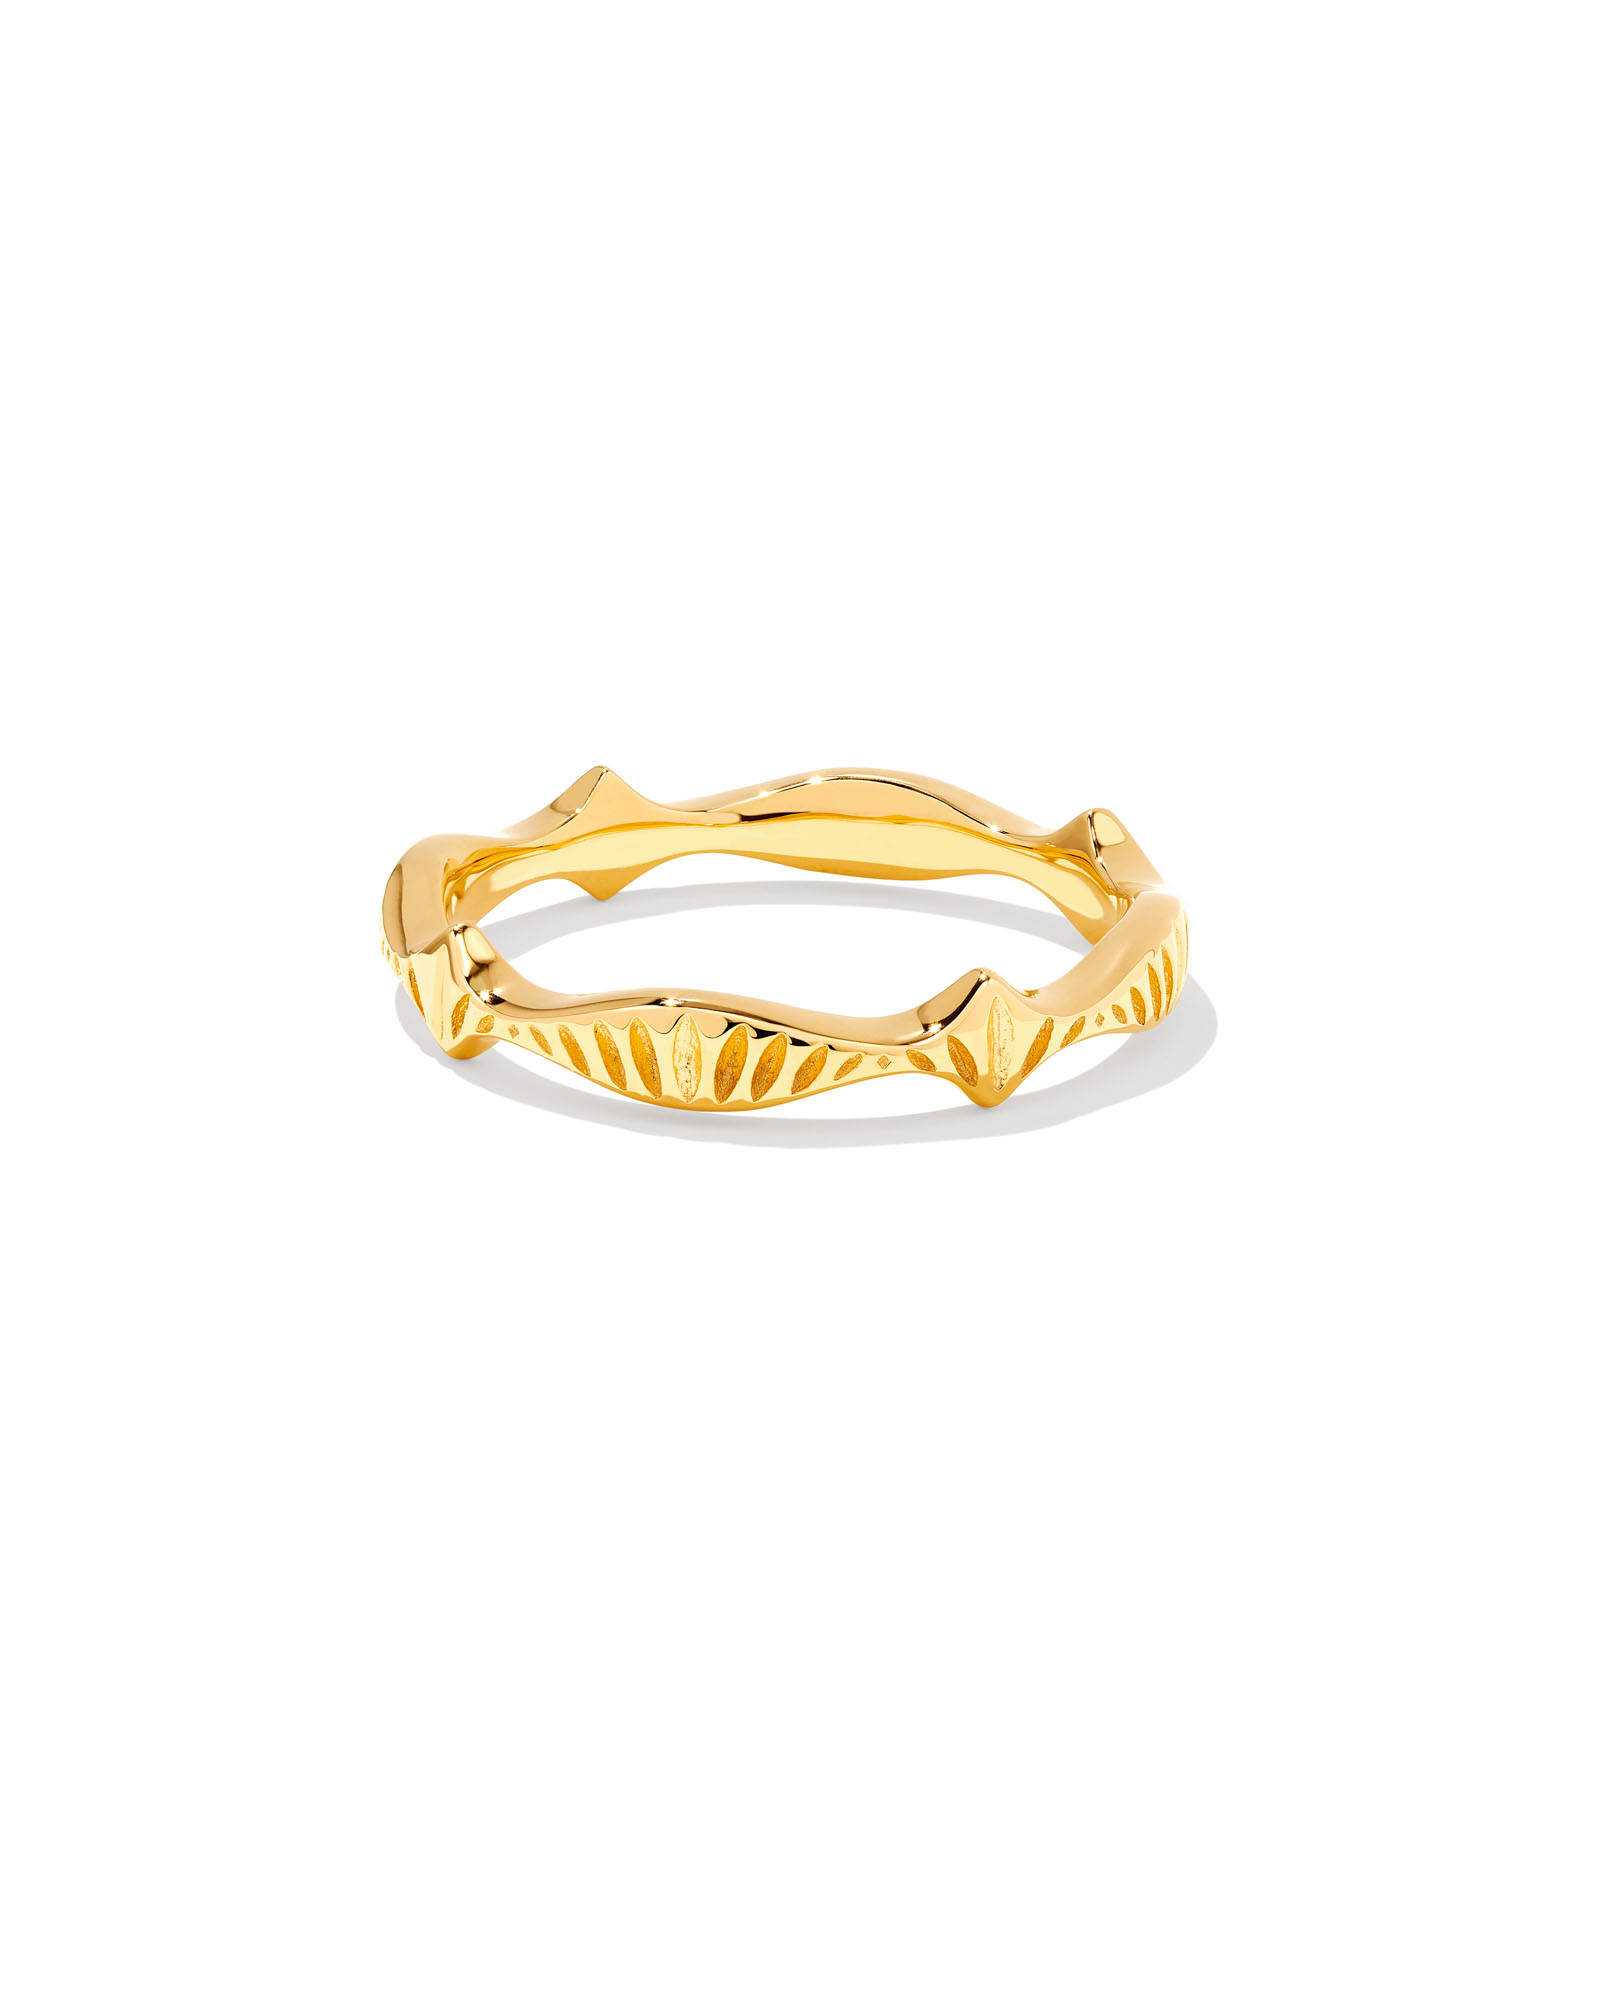 Sophee Band Ring in 18k Gold Vermeil | Kendra Scott